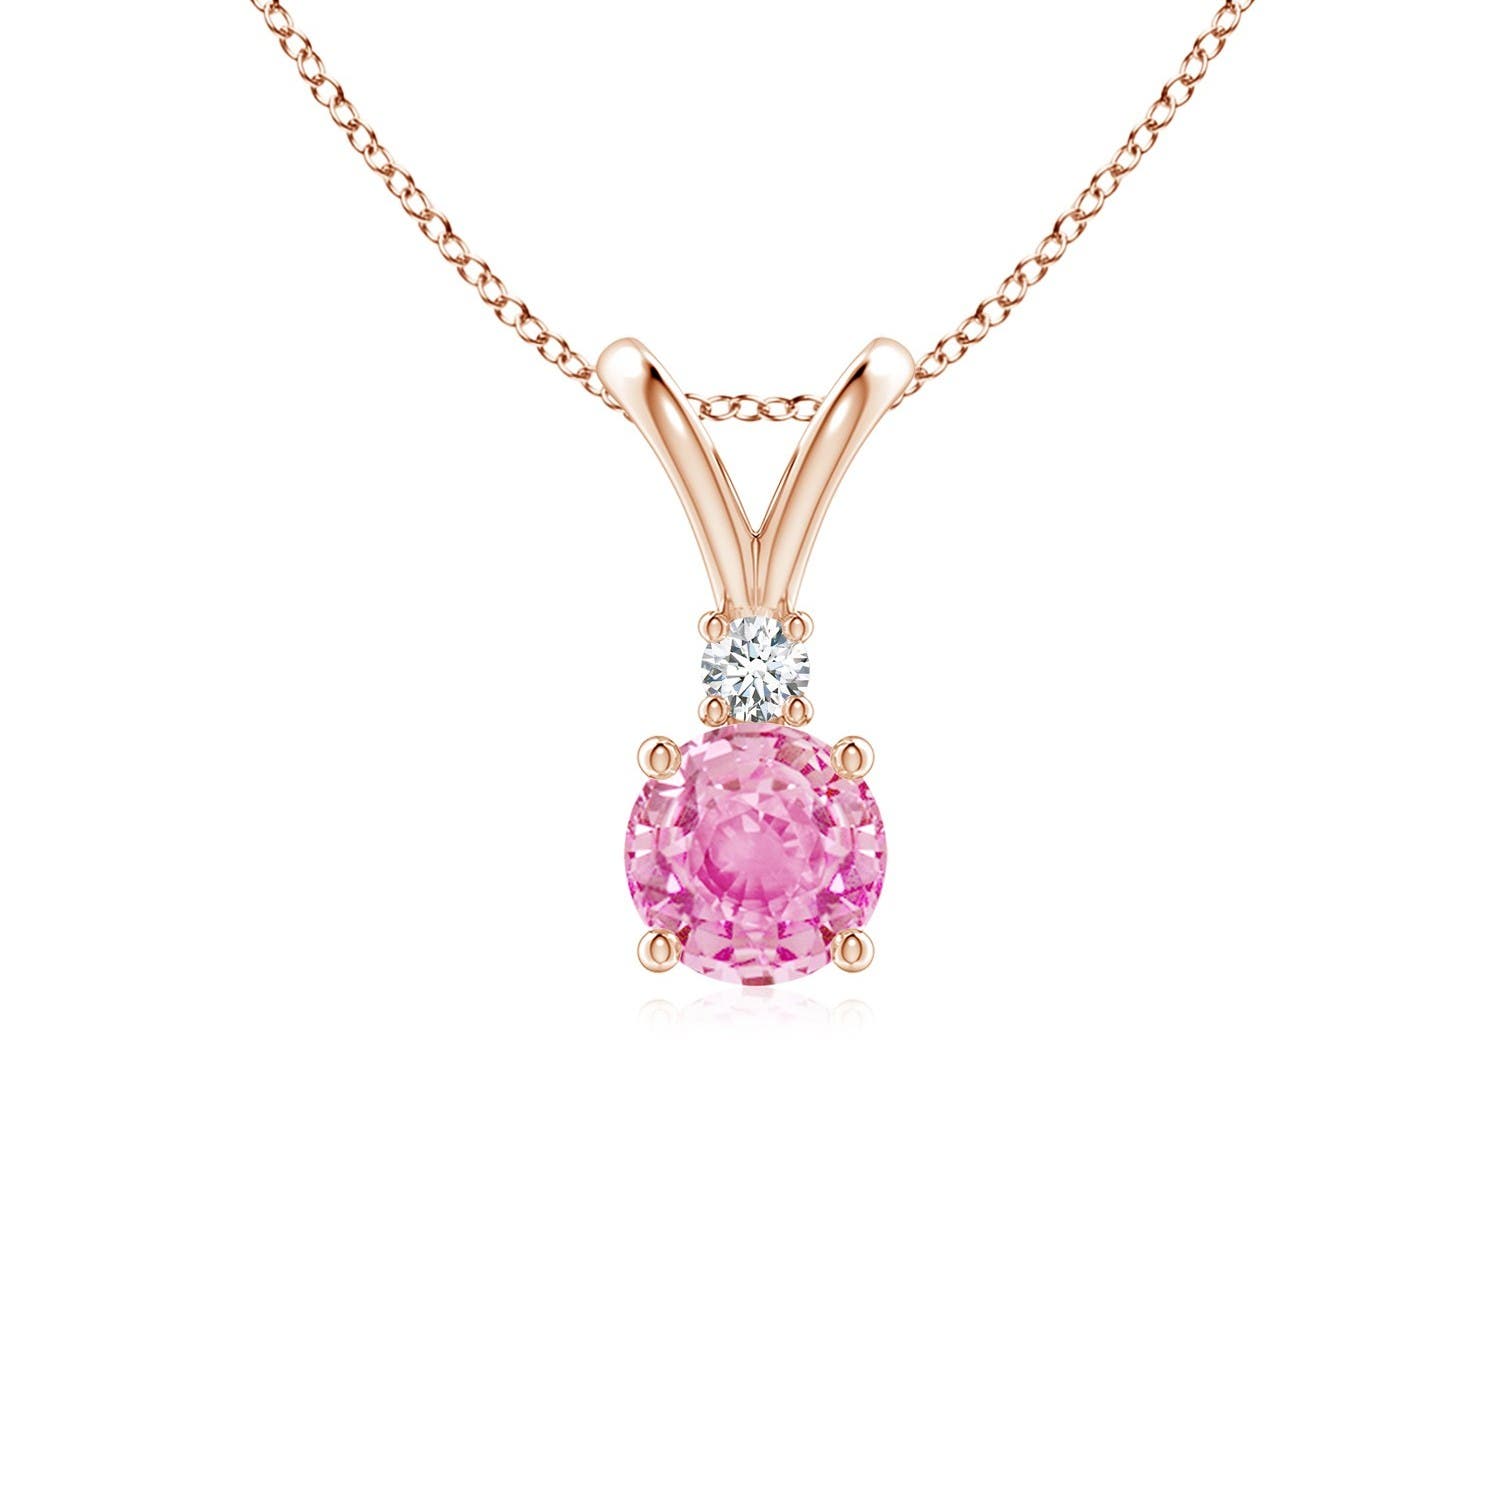 A - Pink Sapphire / 0.63 CT / 14 KT Rose Gold